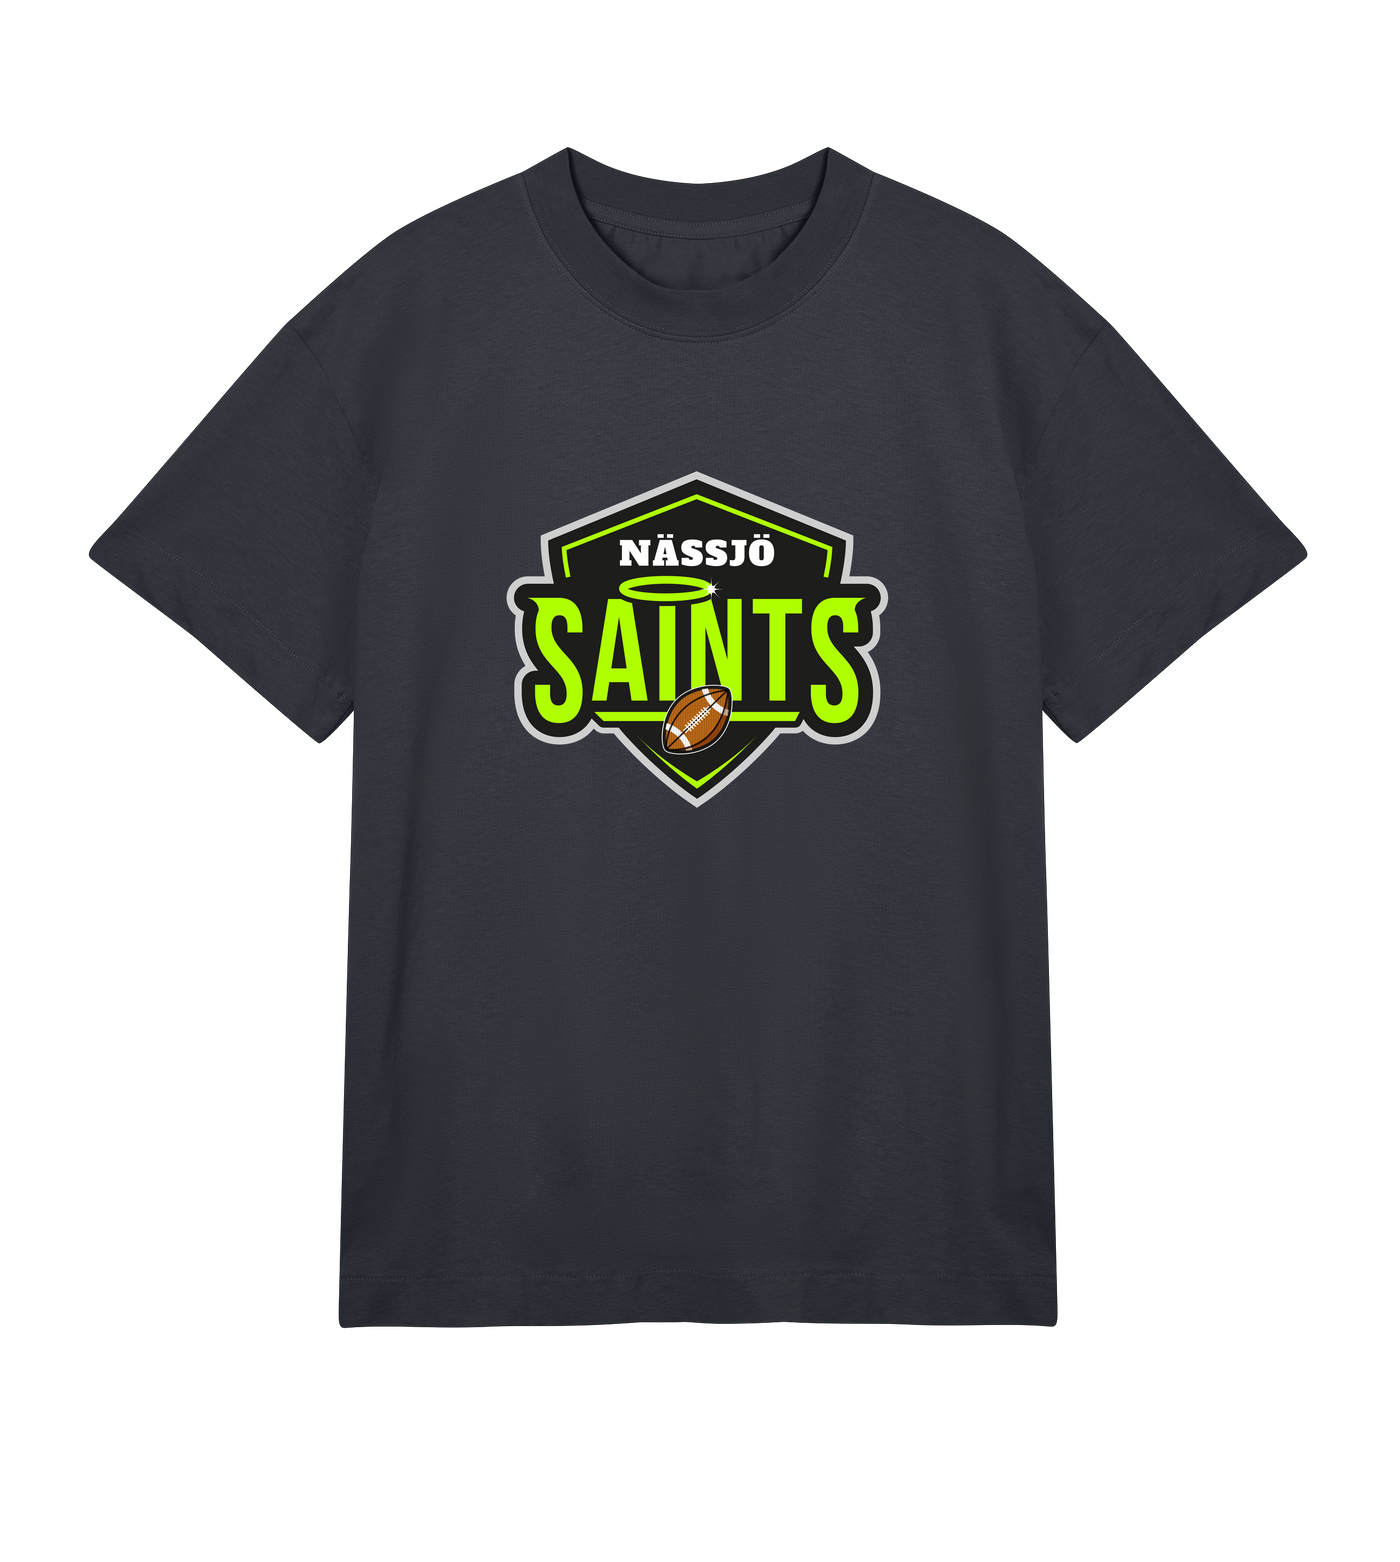 Nässjö Saints Boxy Tee - Premium t-shirt from REYRR STUDIO - Shop now at Reyrr Athletics